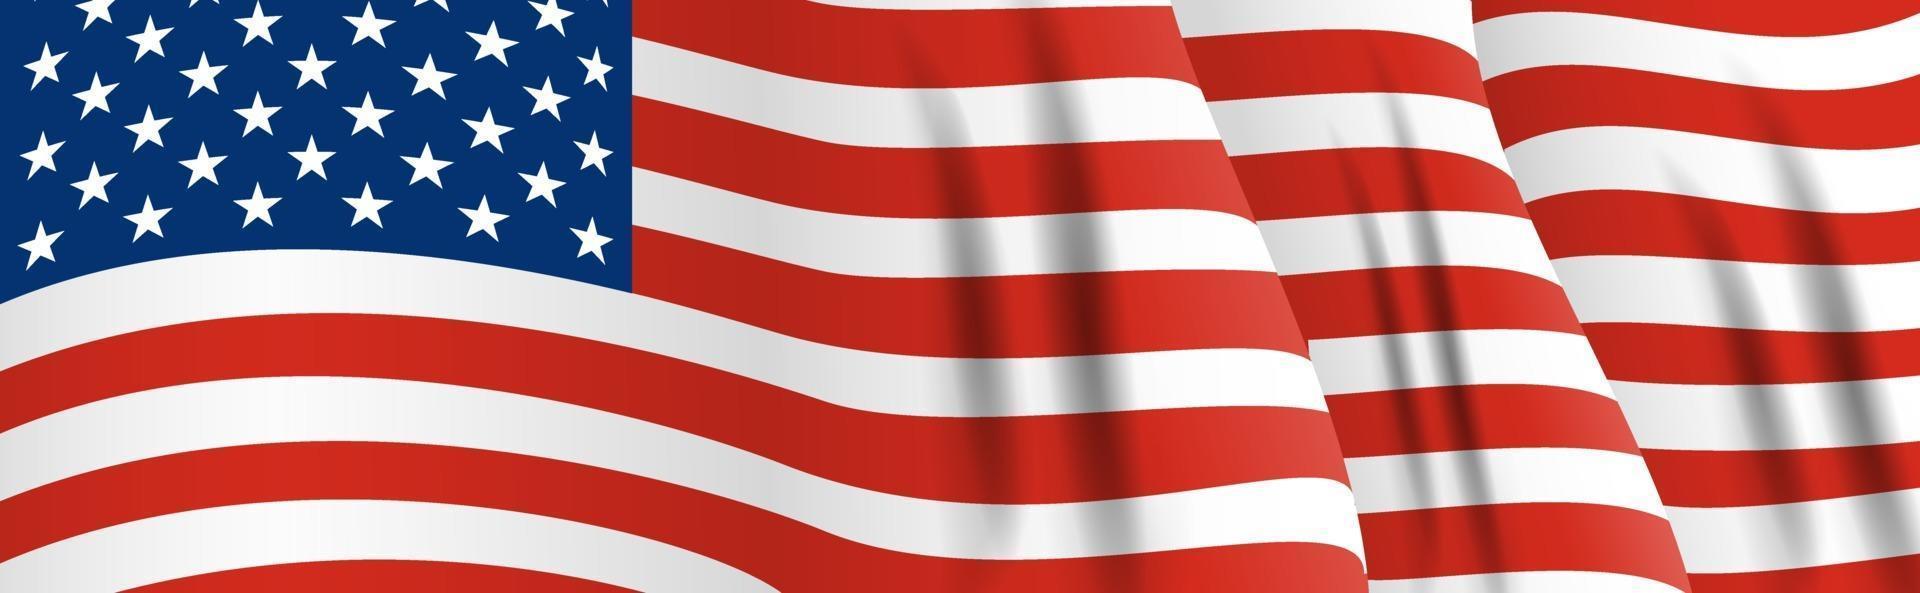 National flag of America. Waving USA banner close up. vector